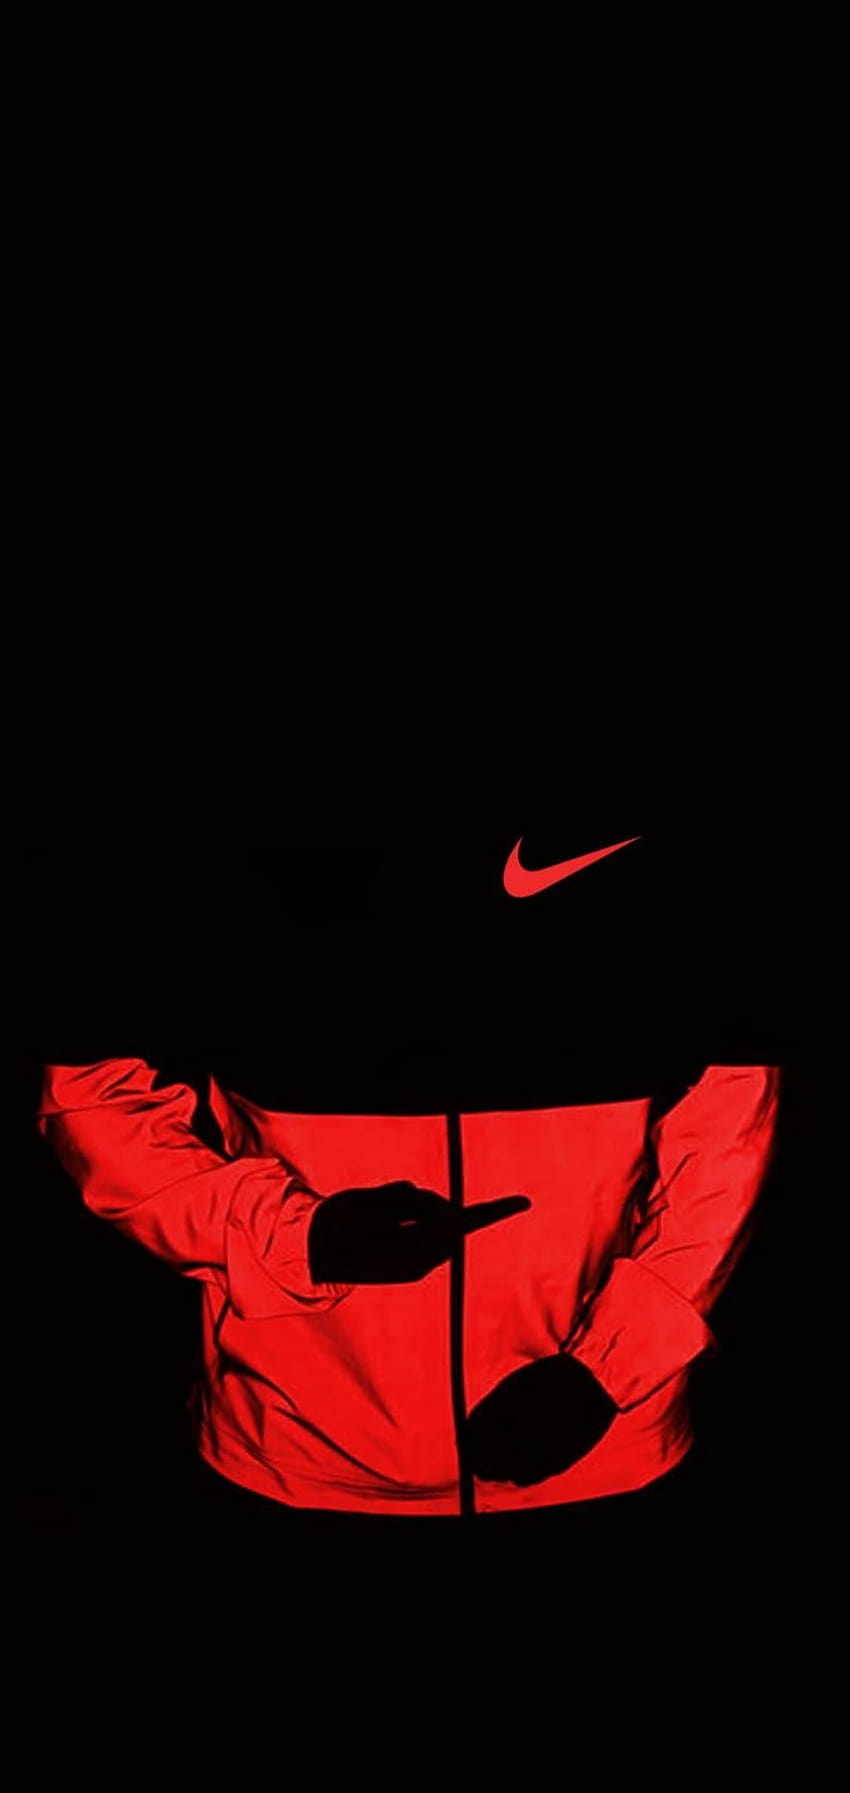 Nike wallpaper for iPhone. - Nike